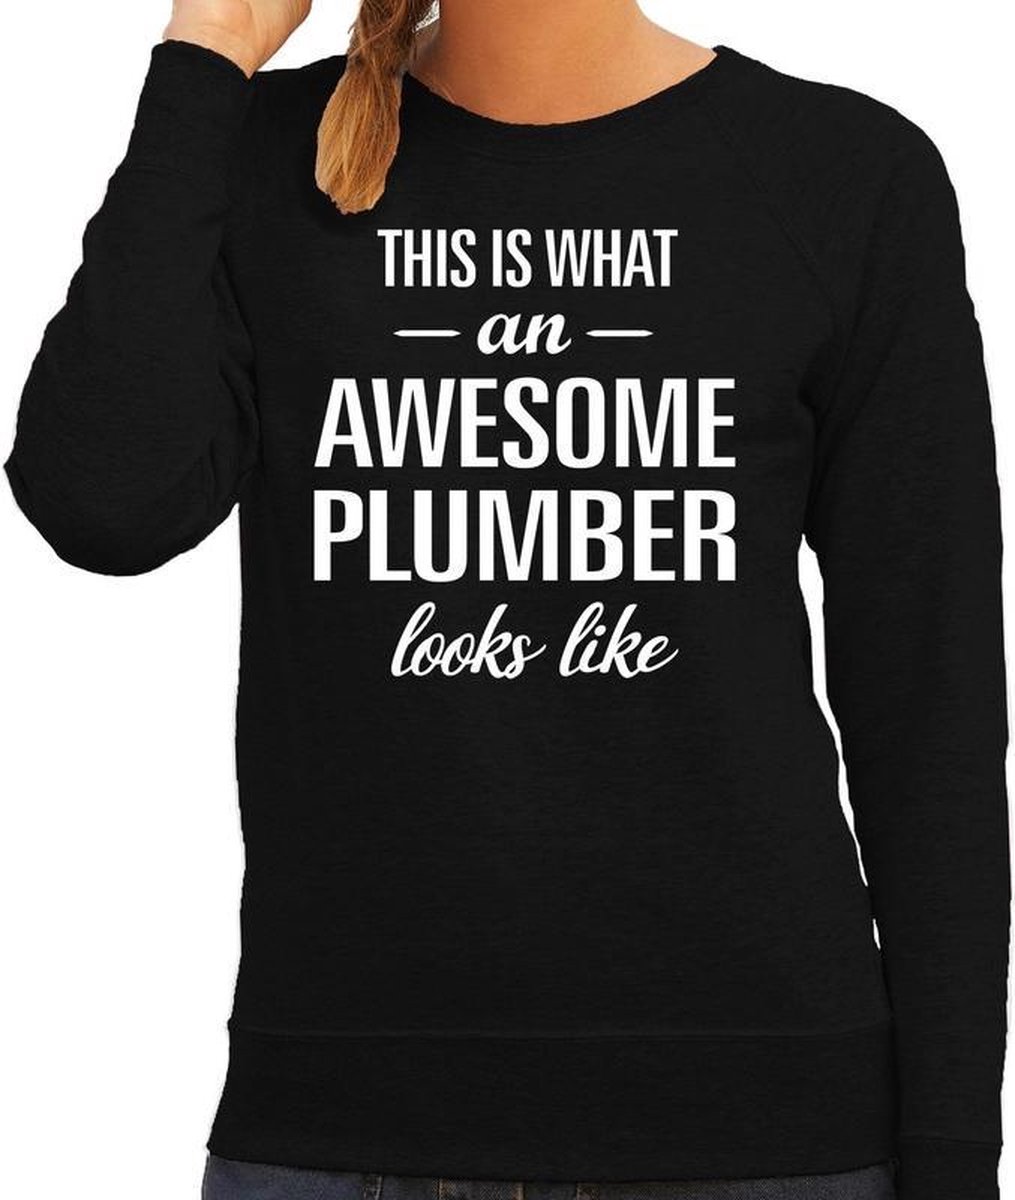 Awesome plumber - geweldige loodgieter cadeau t-shirt zwart dames - beroepen shirts / Moederdag / verjaardag cadeau M - Bellatio Decorations